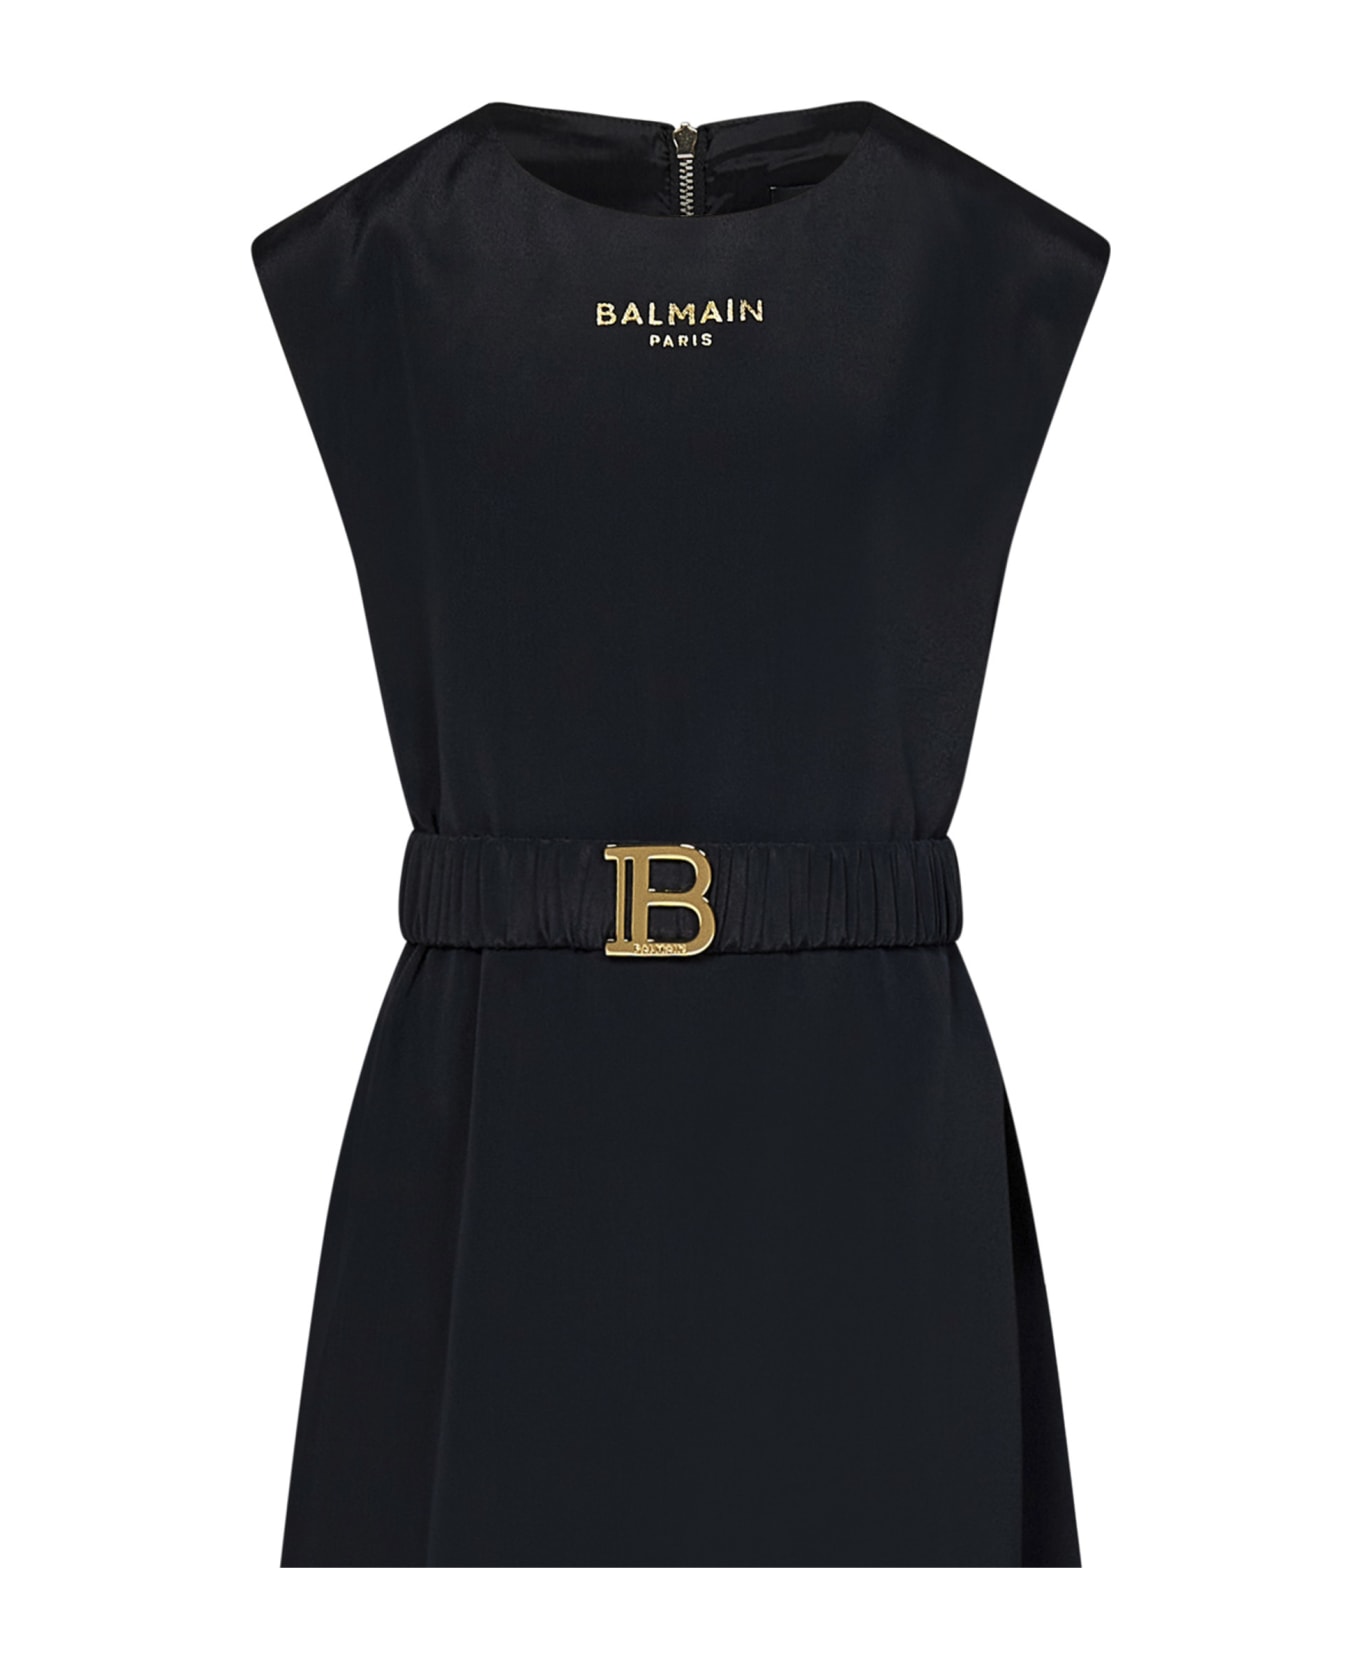 Balmain Dress - Black